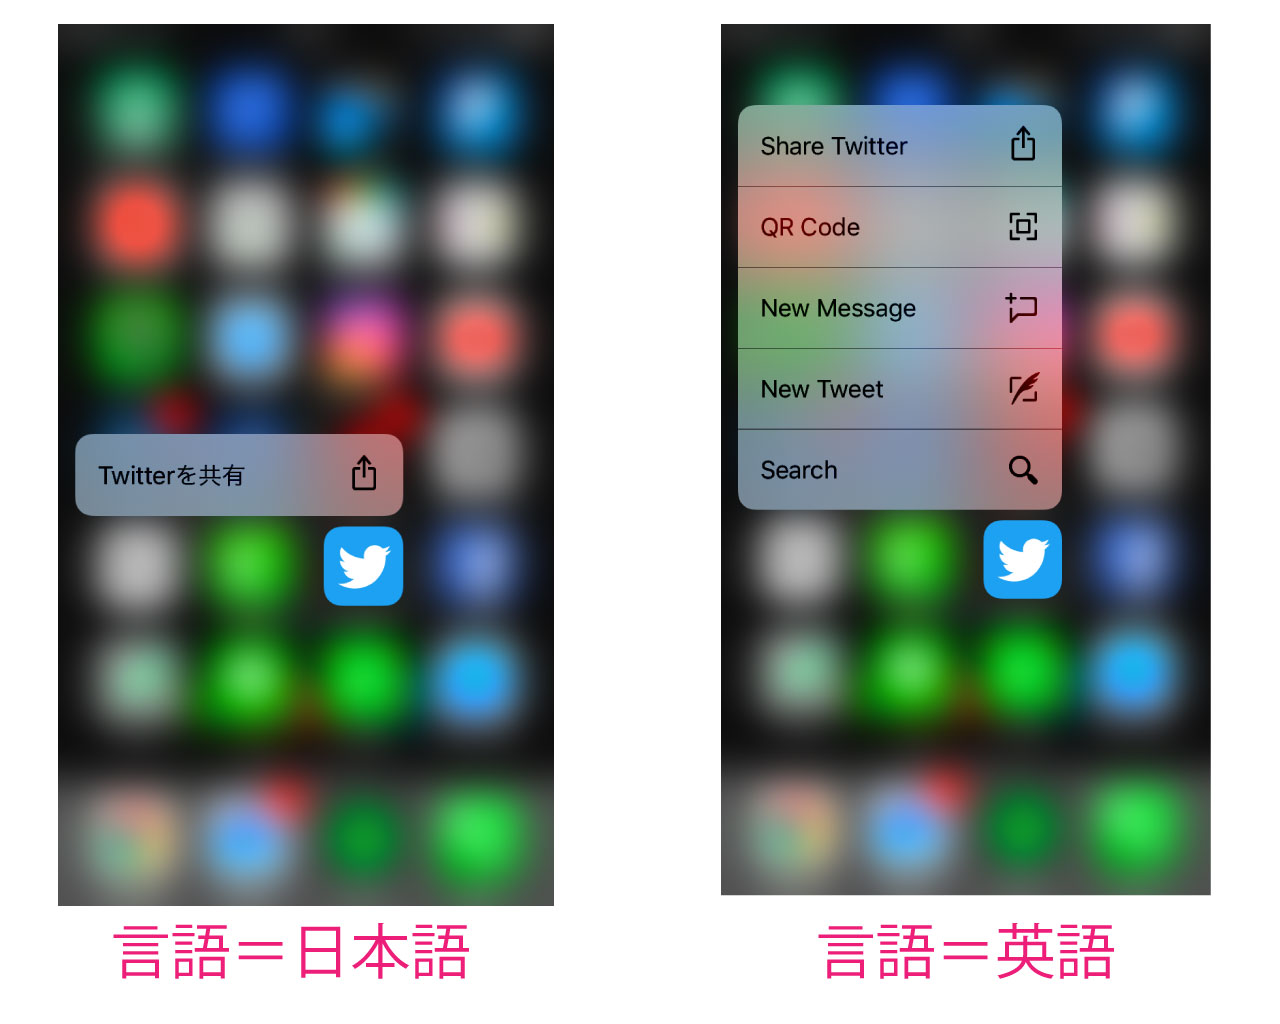 iphone-3dtouch-app-icon-shortcut-memu-12